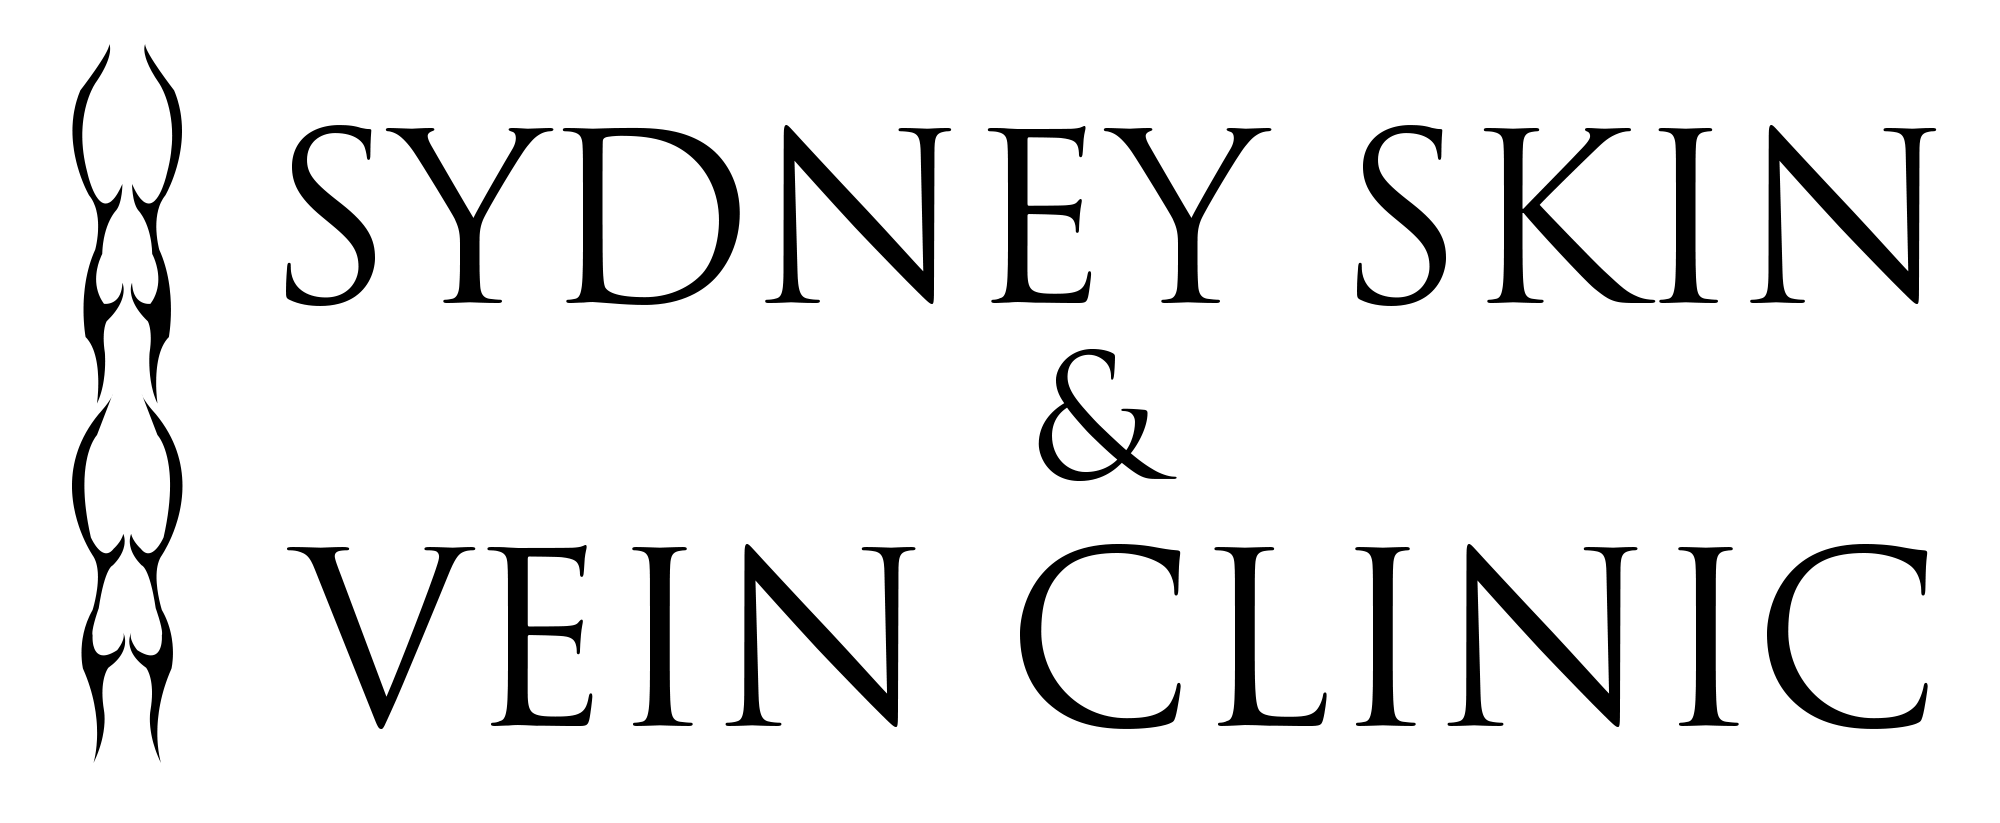 Sydney Skin and Veins Clinic logo